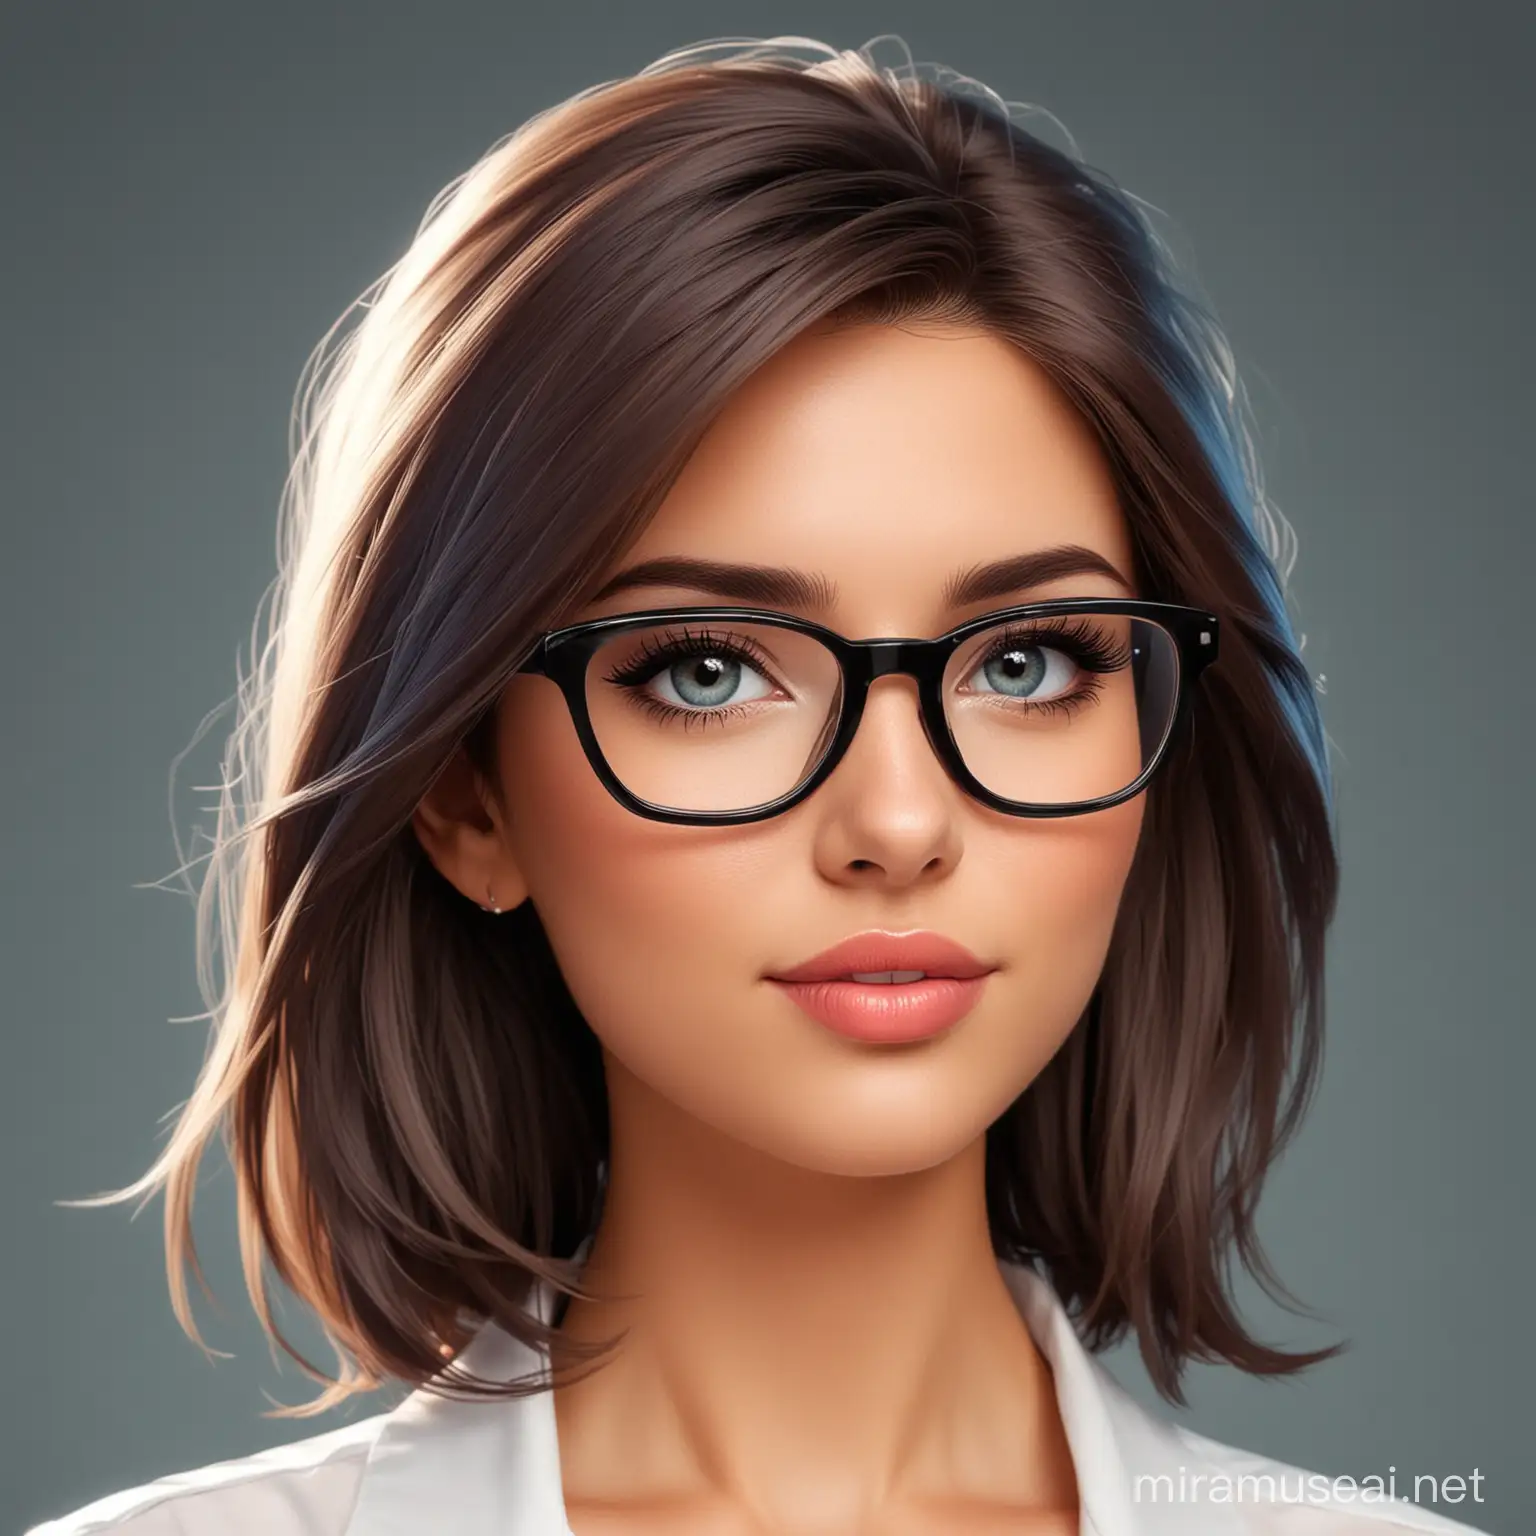 Cartoon Woman with Elegant Glasses